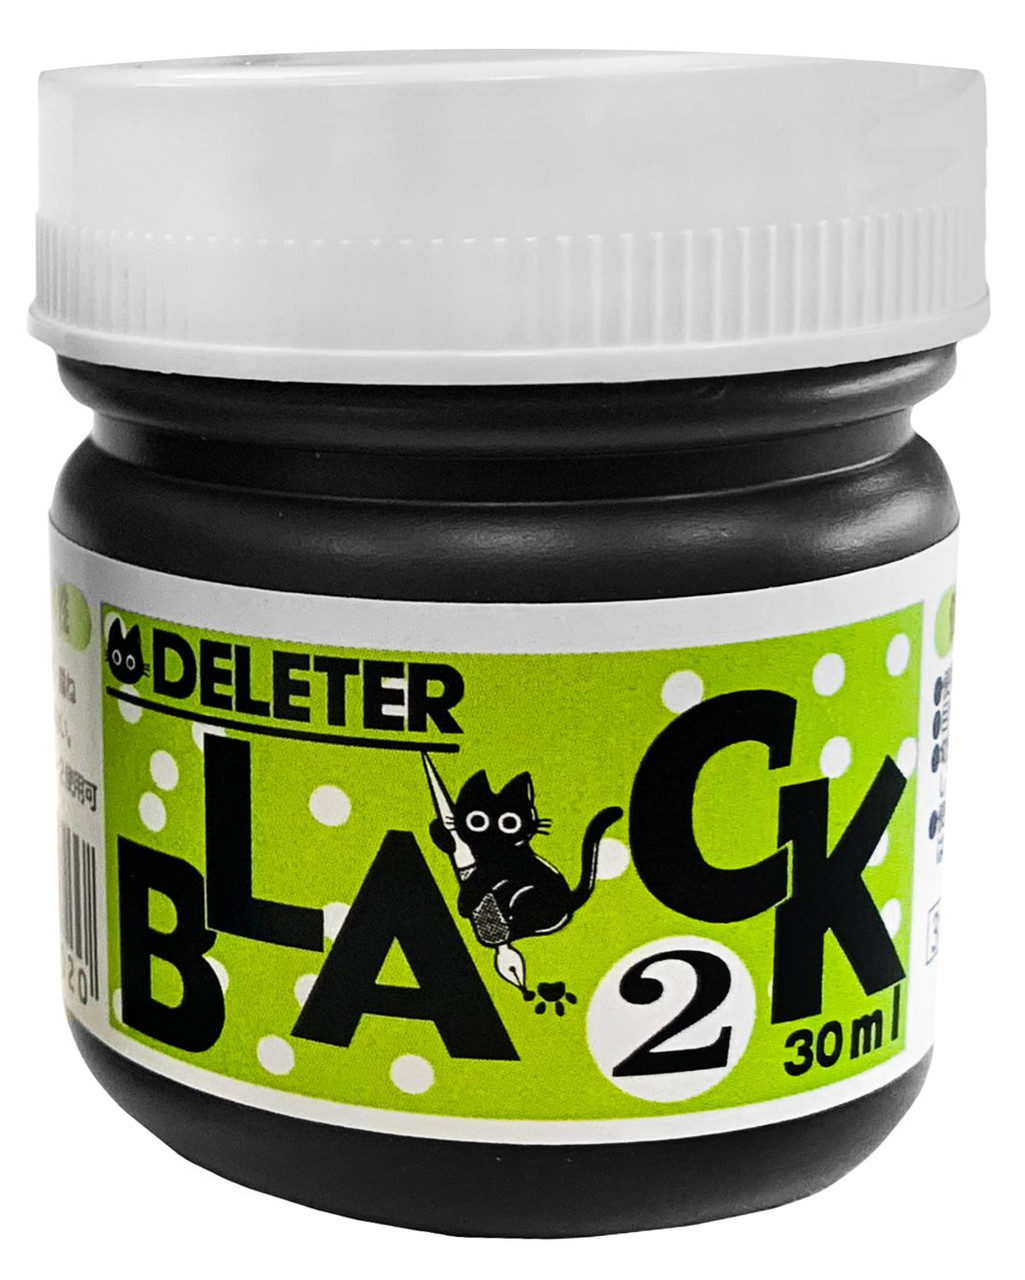 Deleter Black 4 Ink - Waterproof and Extra Dark - 30ml Bottle